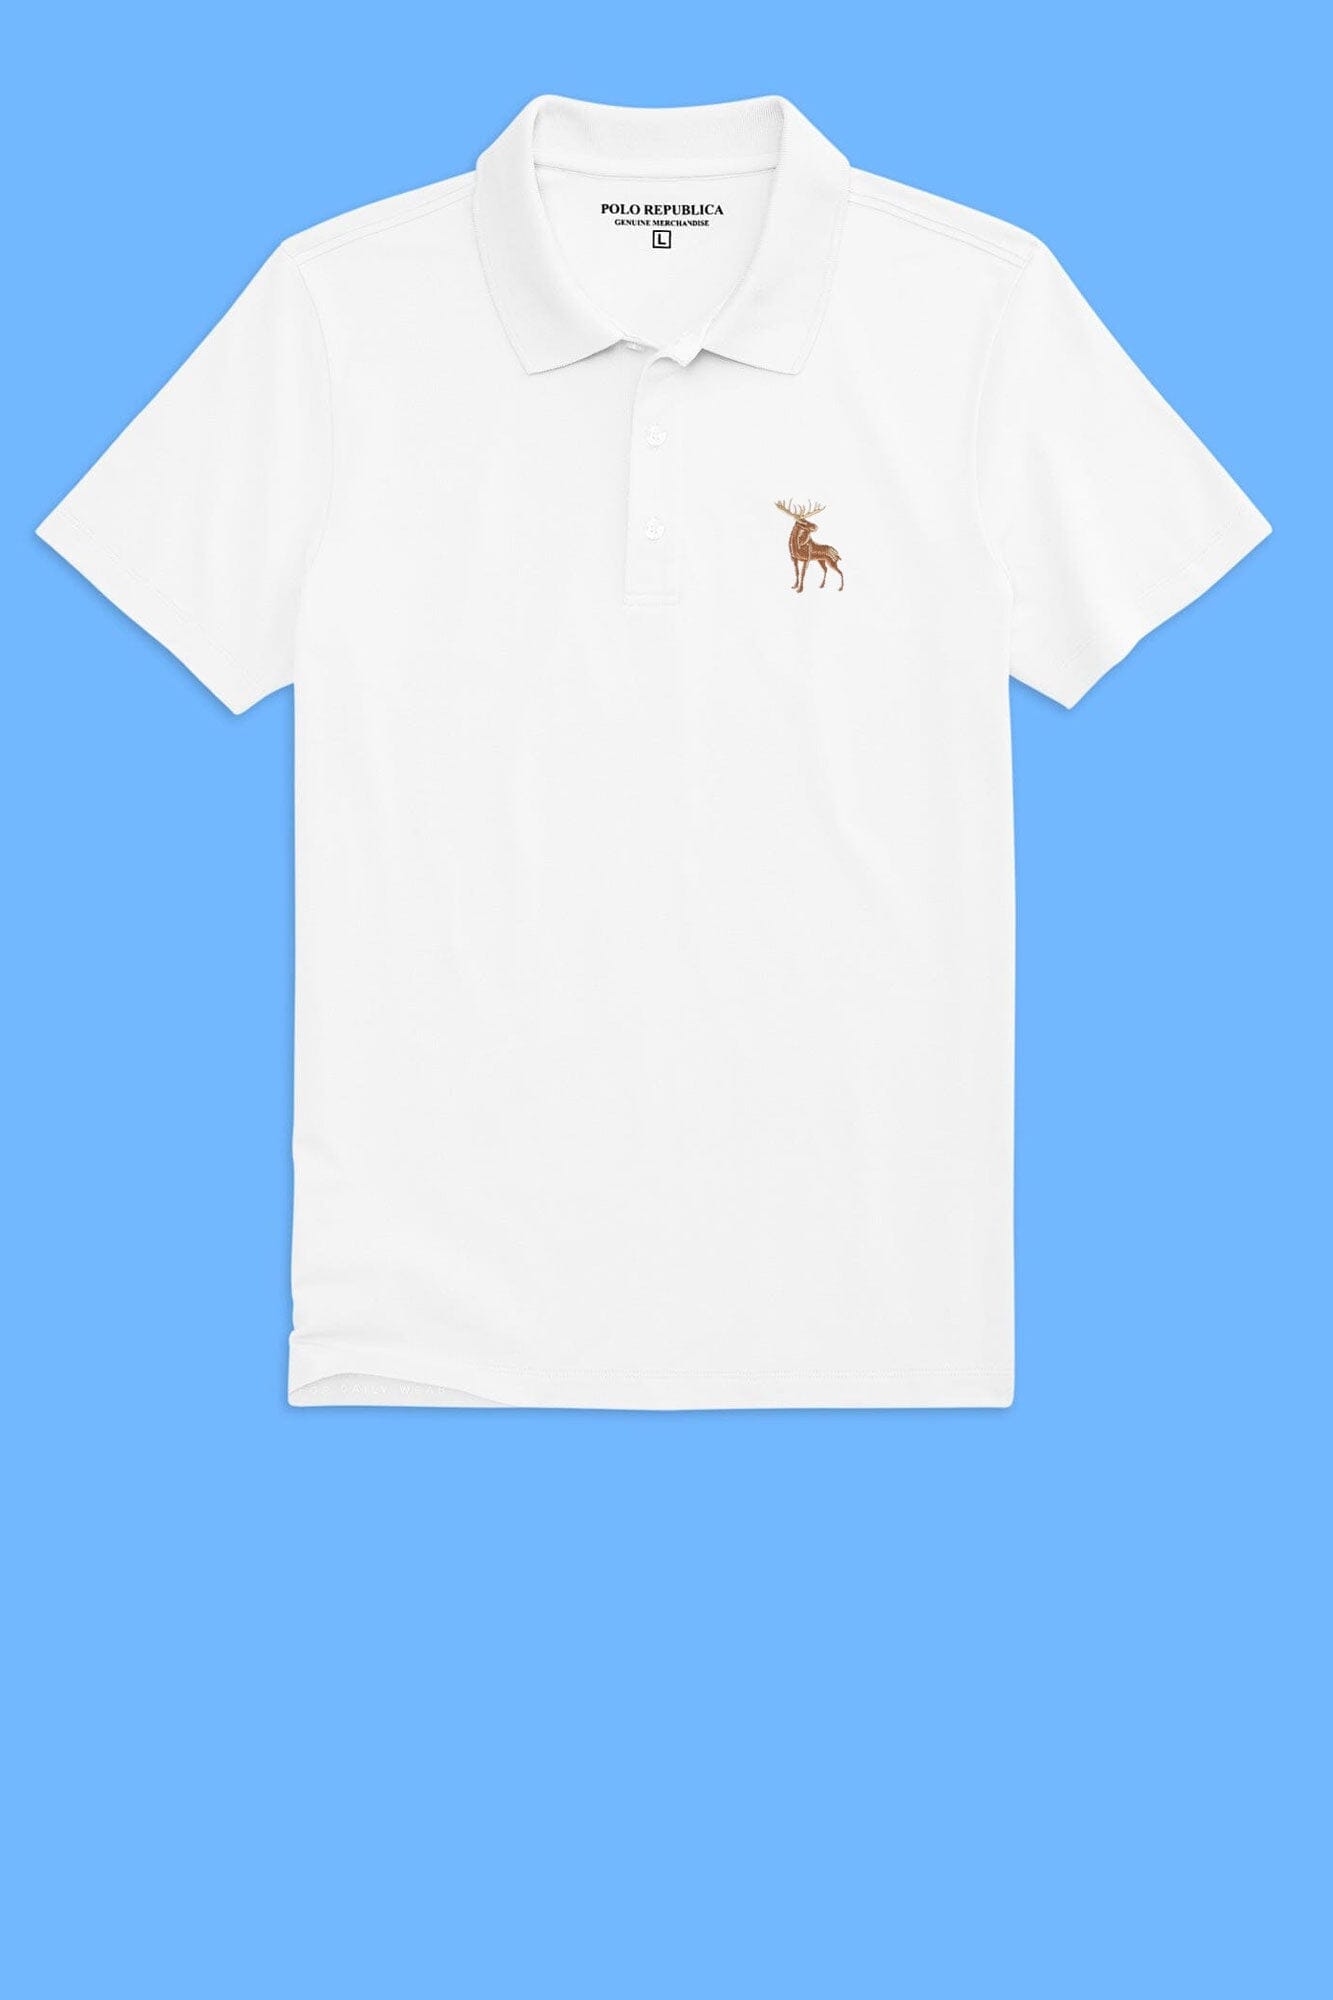 Polo Republica Men's Majestic Moose Embroidered Polo Shirt white